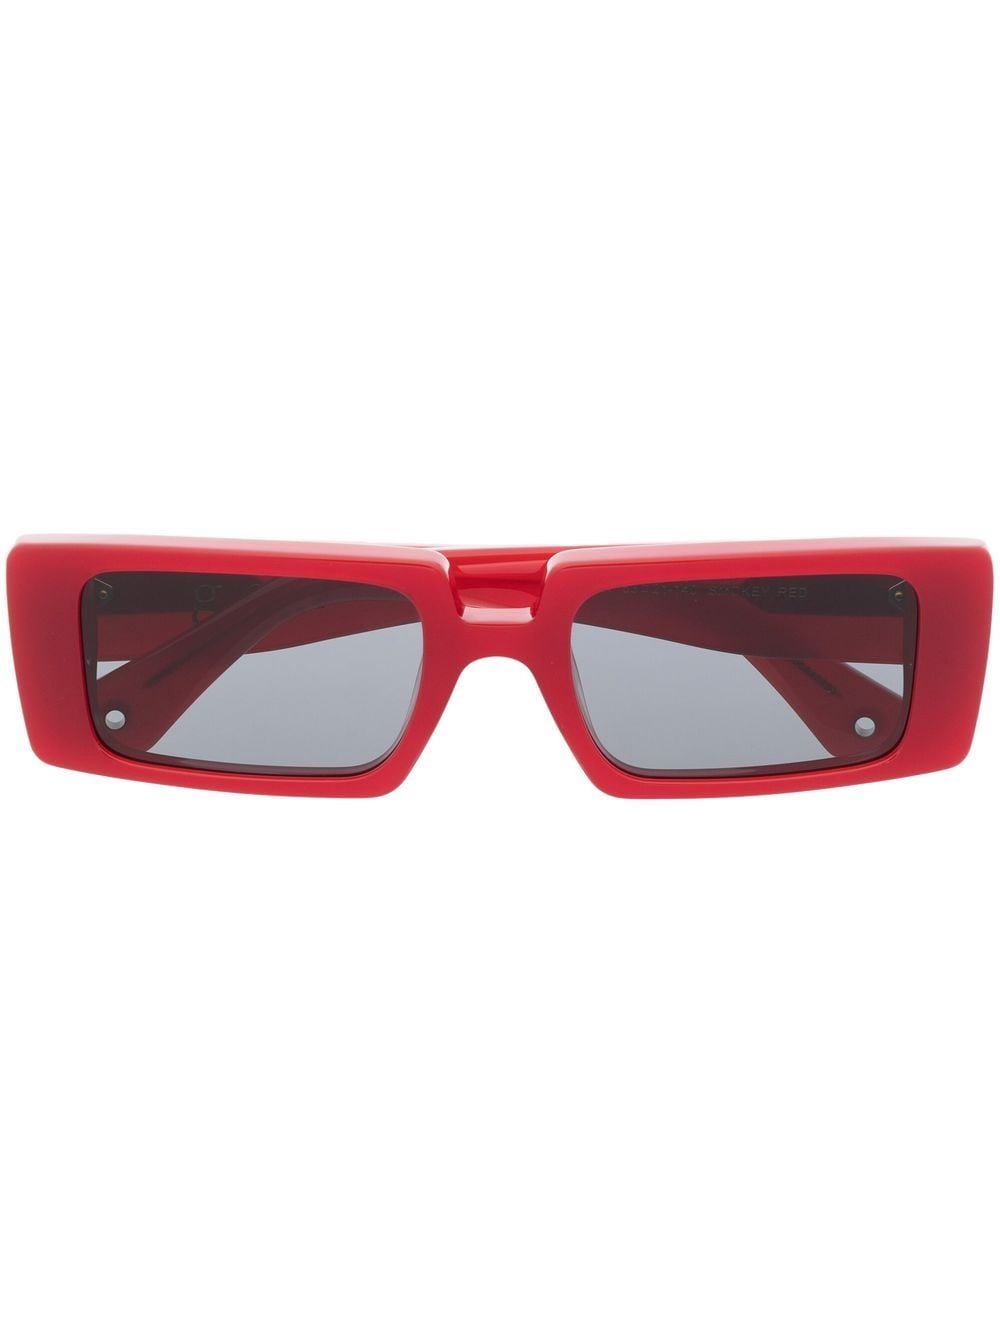 G.O.D Eyewear FOUR tinted square-frame sunglasses - Red von G.O.D Eyewear